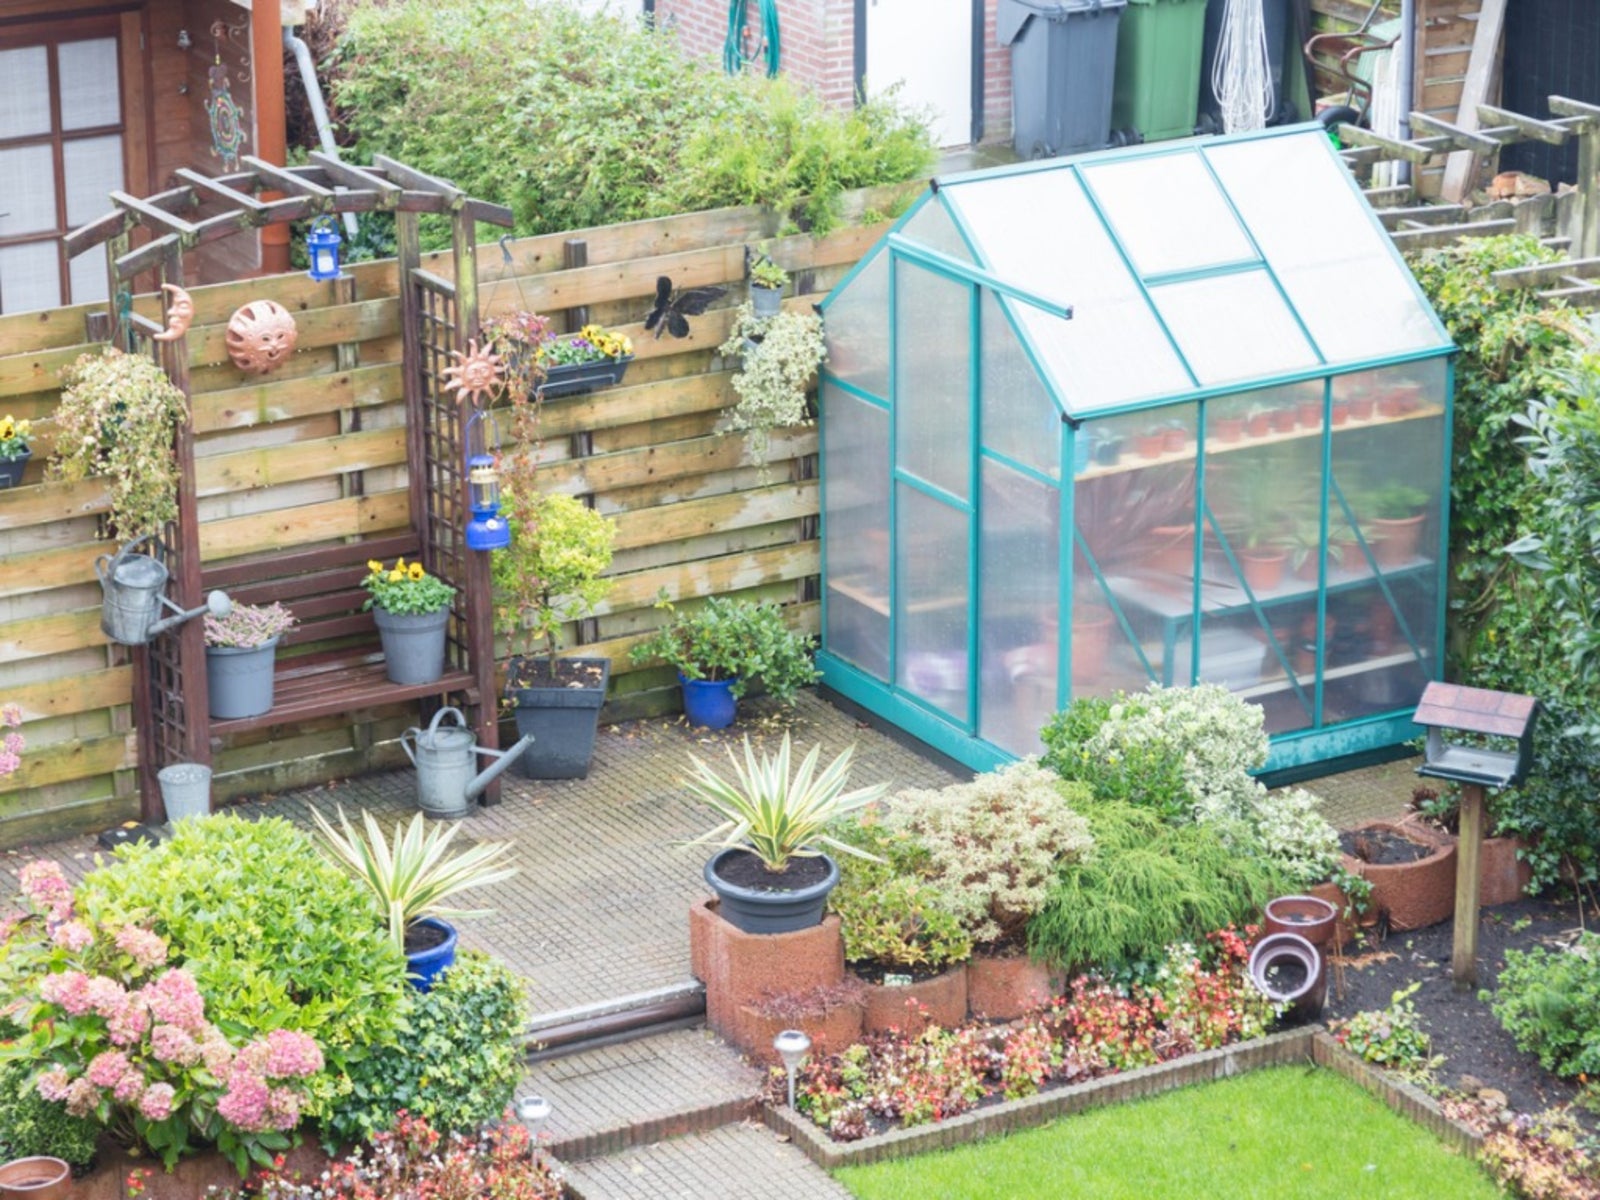 BenefitUSA Portable Mini Greenhouse Small Garden Greenhouse for Plants/Flowers/Vegetables 3X3X3 